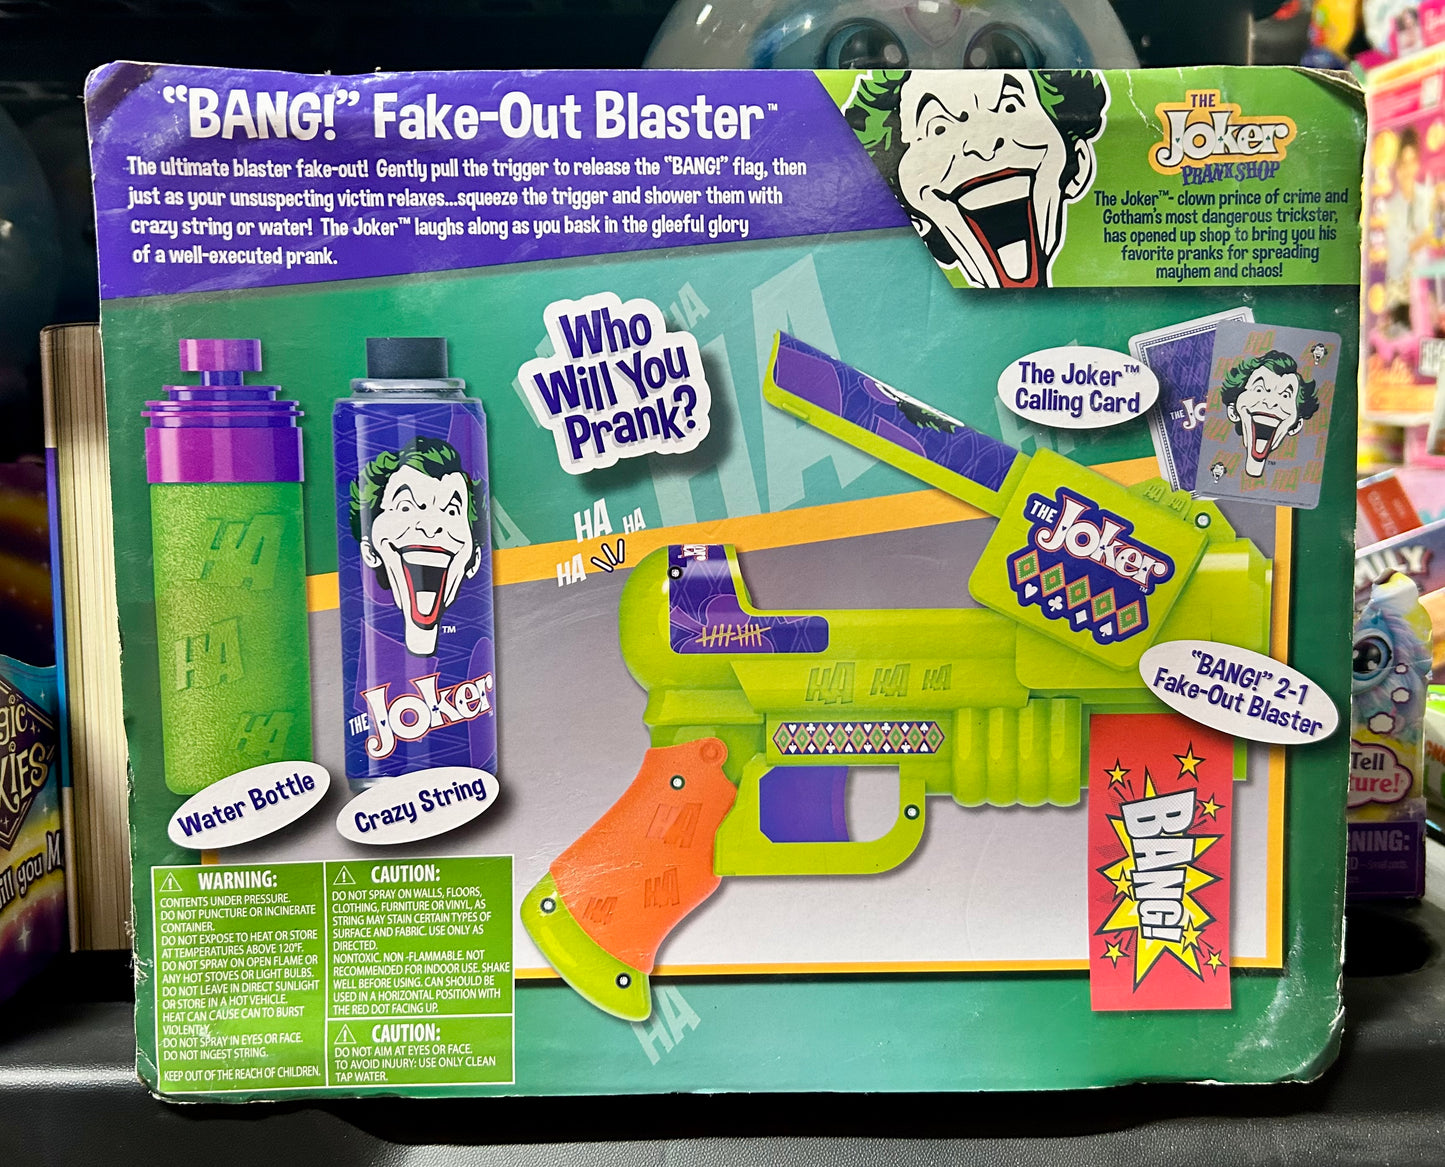 DC The Joker Prank Shop 2-in-1 Fake-Out Blaster